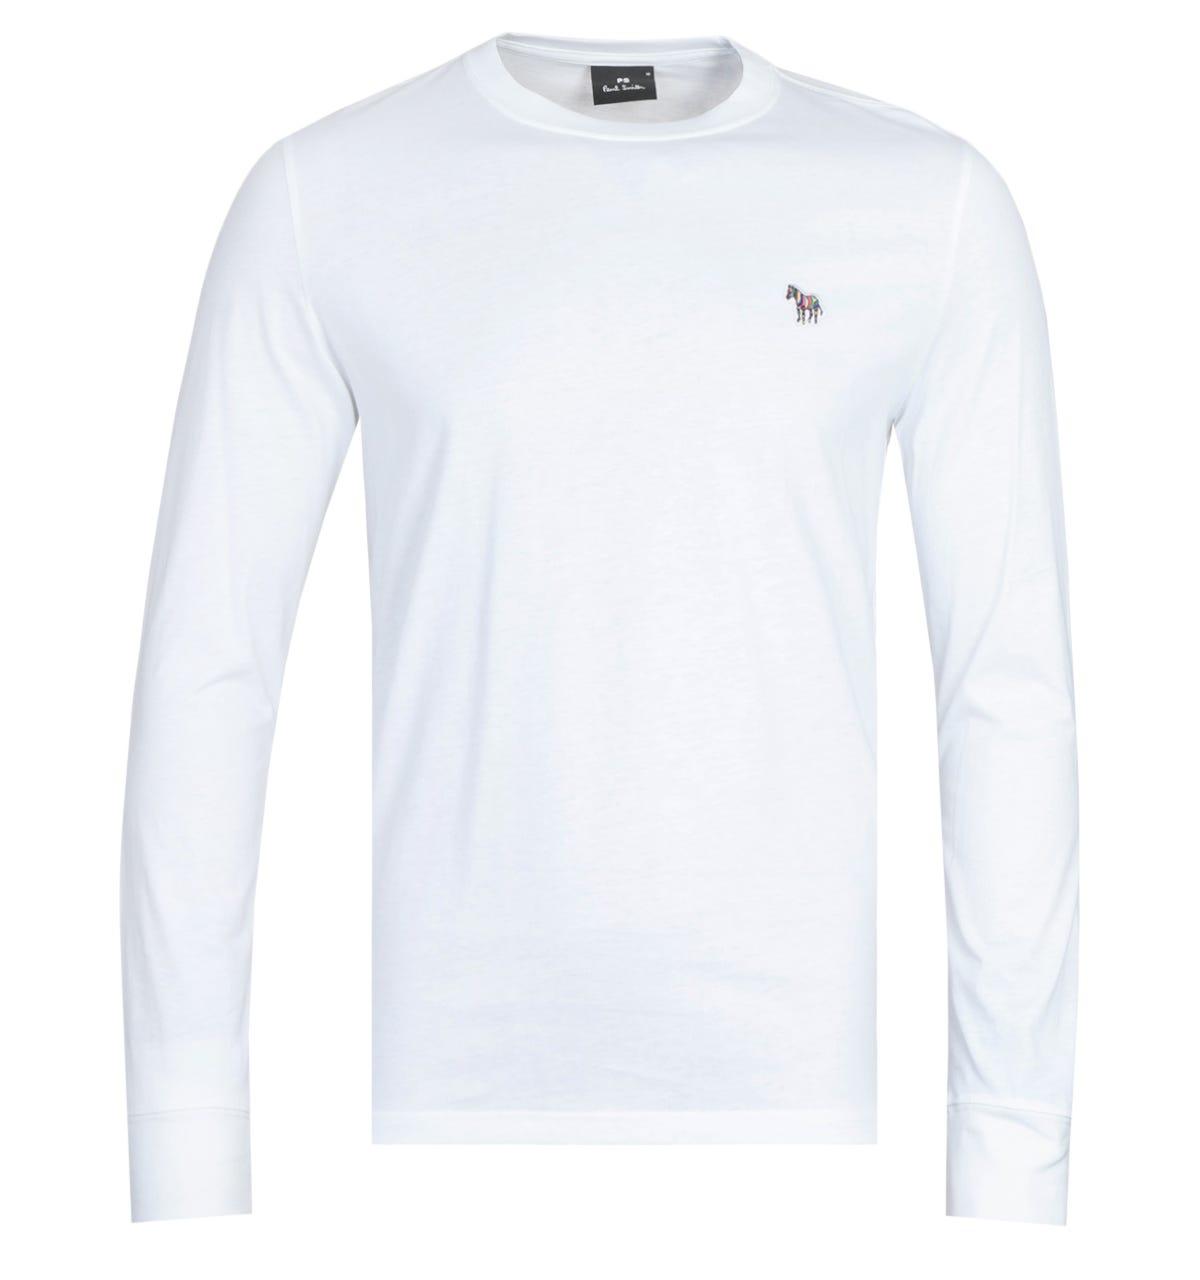 PS by Paul Smith Cotton Long Sleeve Zebra Logo White T-shirt for Men - Lyst